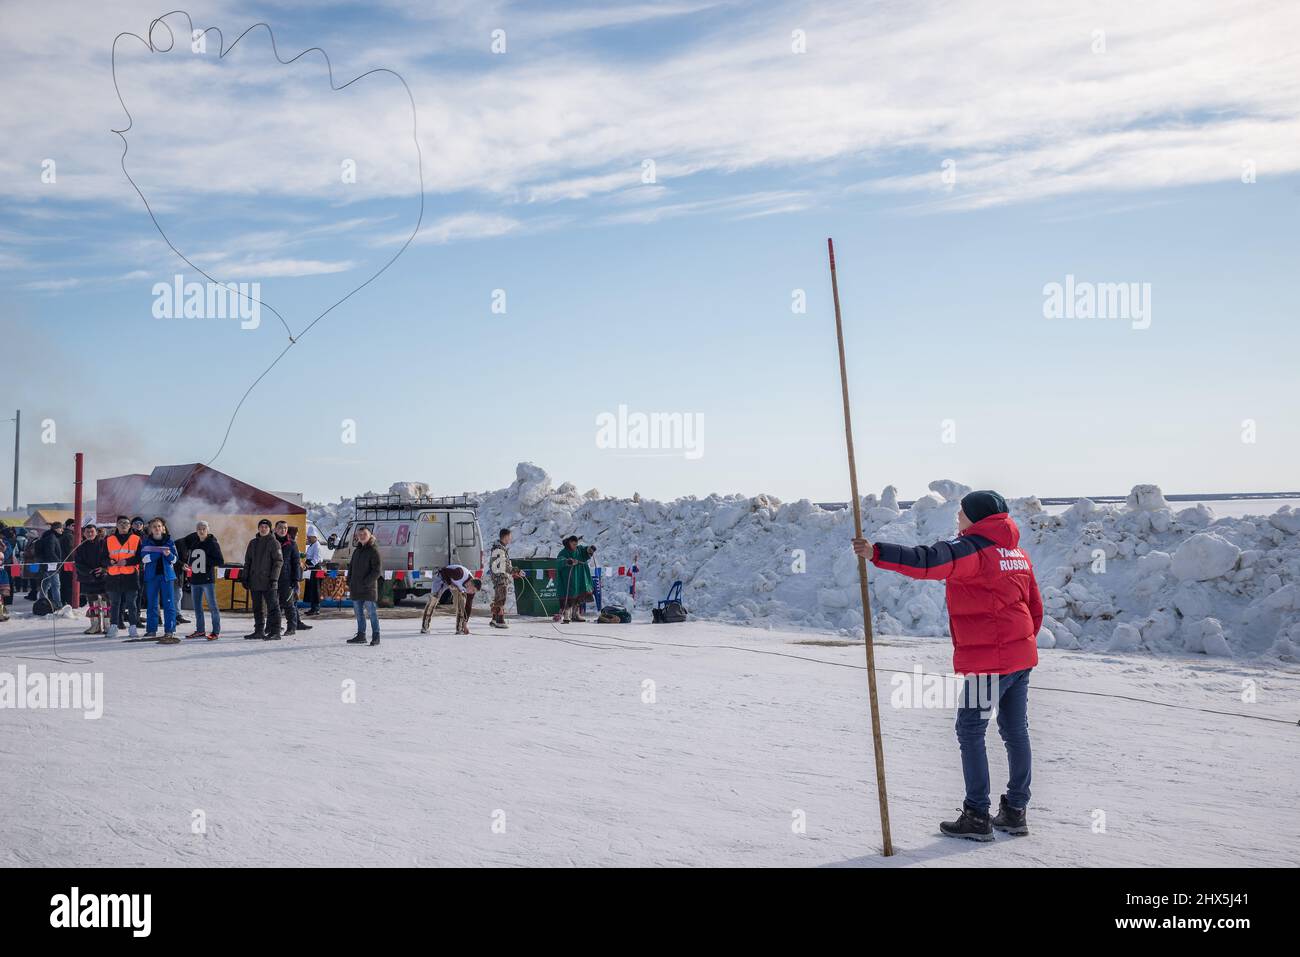 Lazo-Wettbewerb beim Rentier Herders Festival in Salekhard, Autonomer Kreis Yamalo-Nenzen, Russland Stockfoto